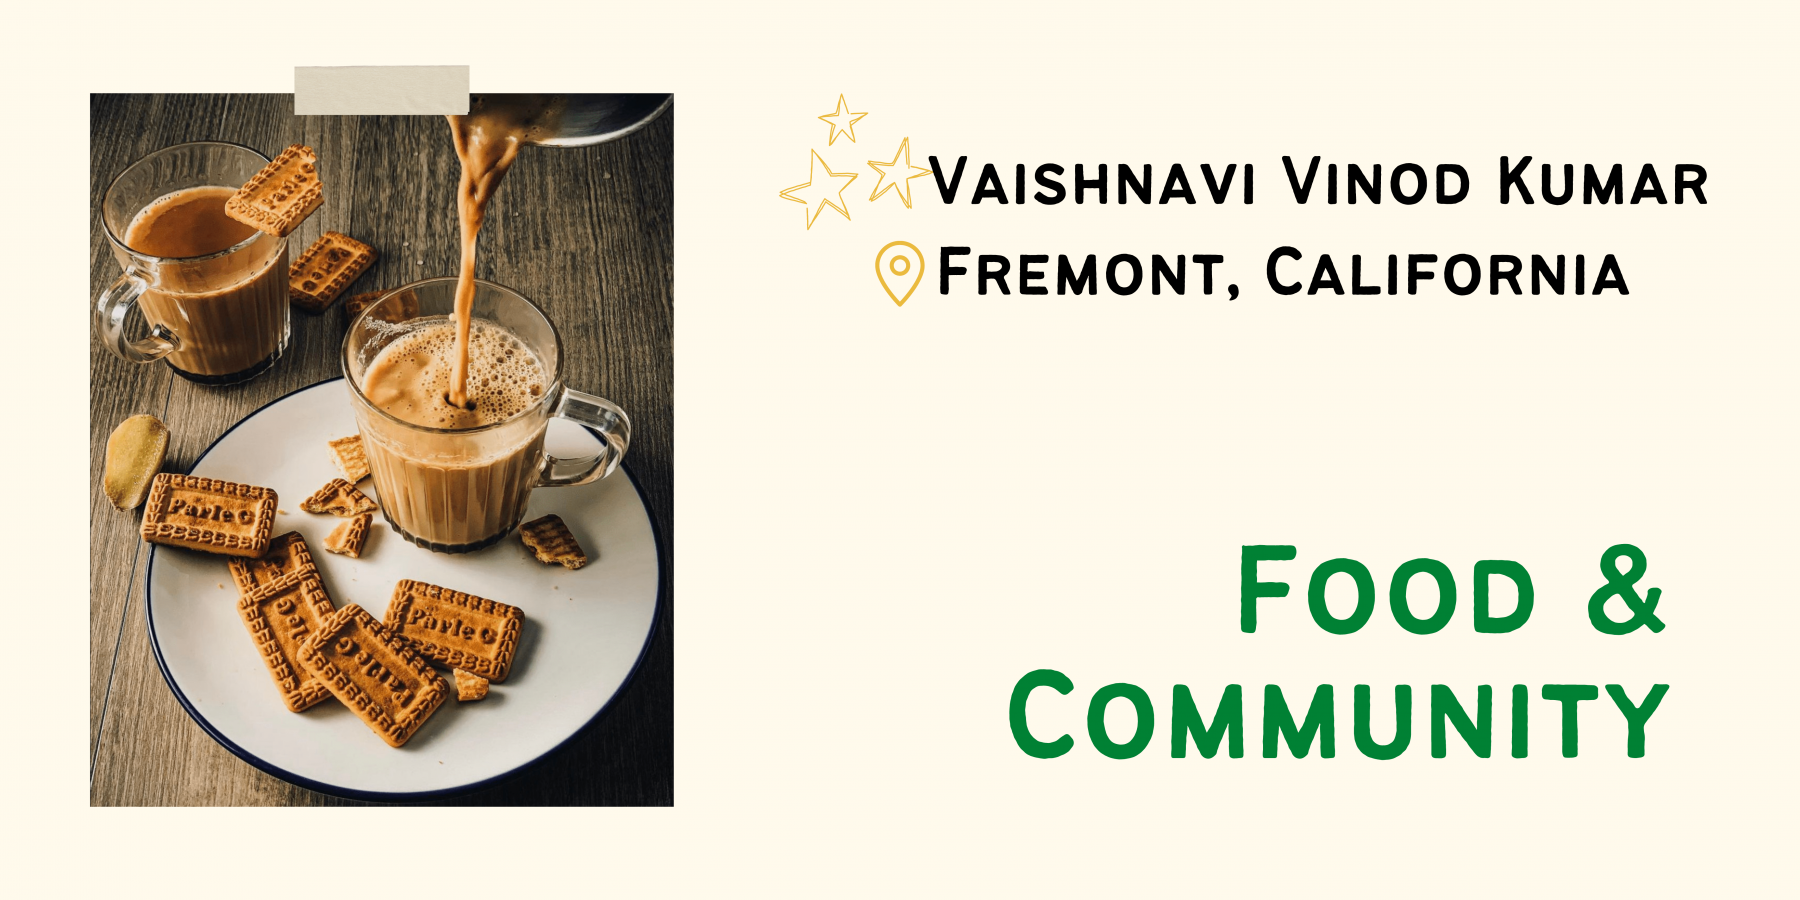 Food & Community Winner Vaishnavi Vinod Kumar